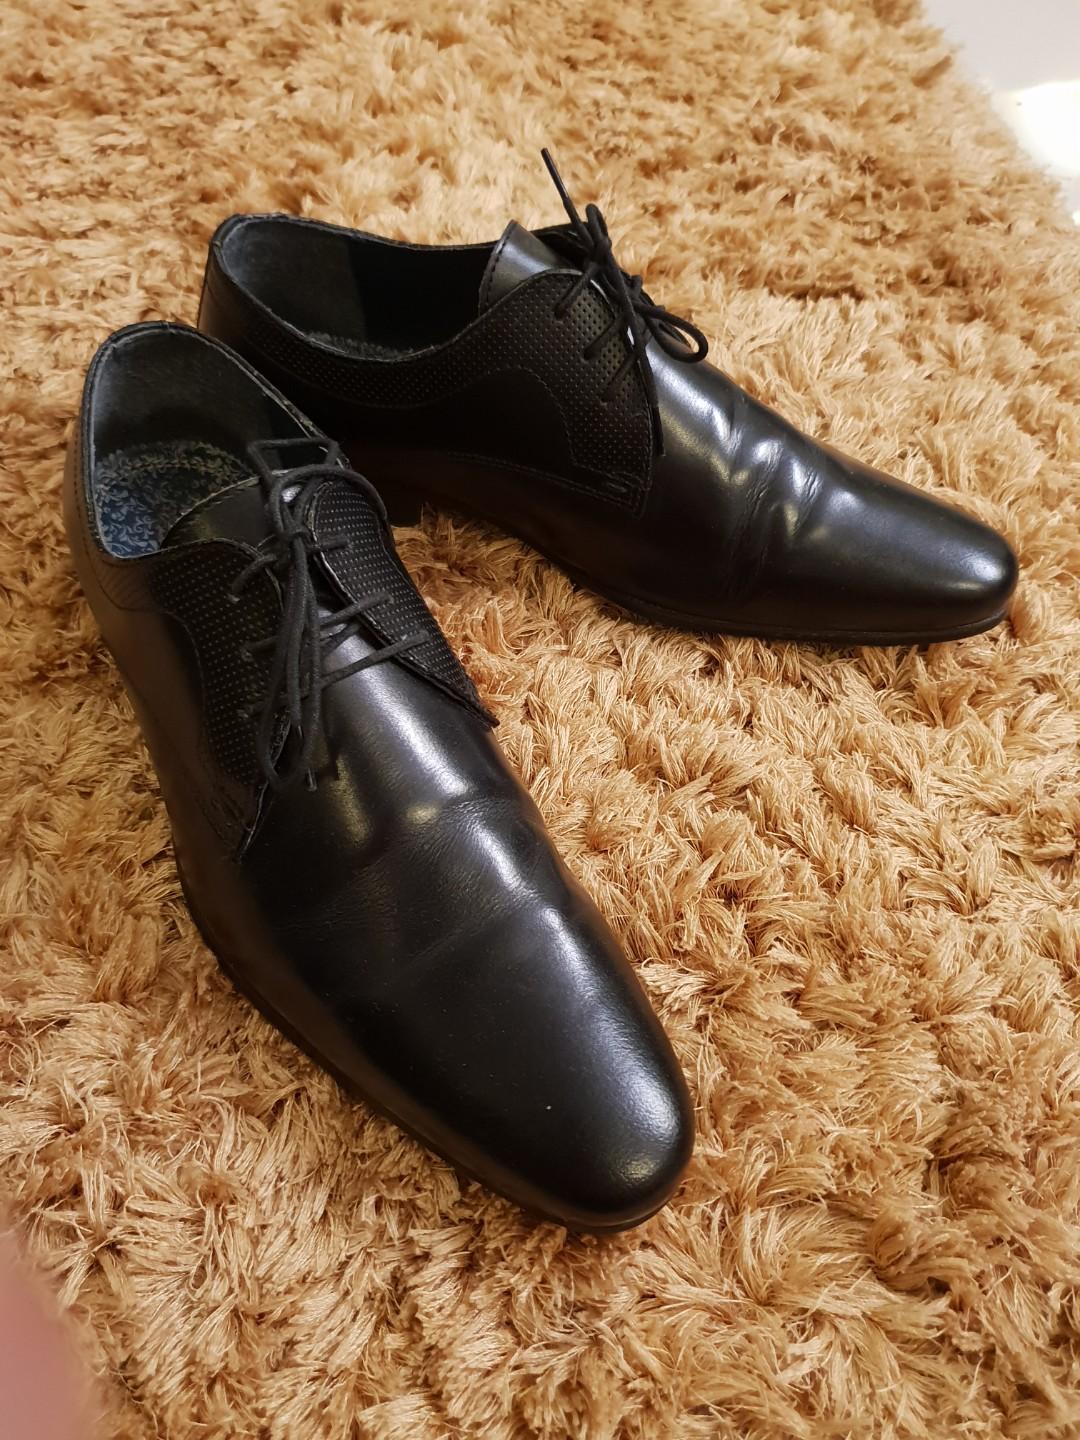 burton formal shoes